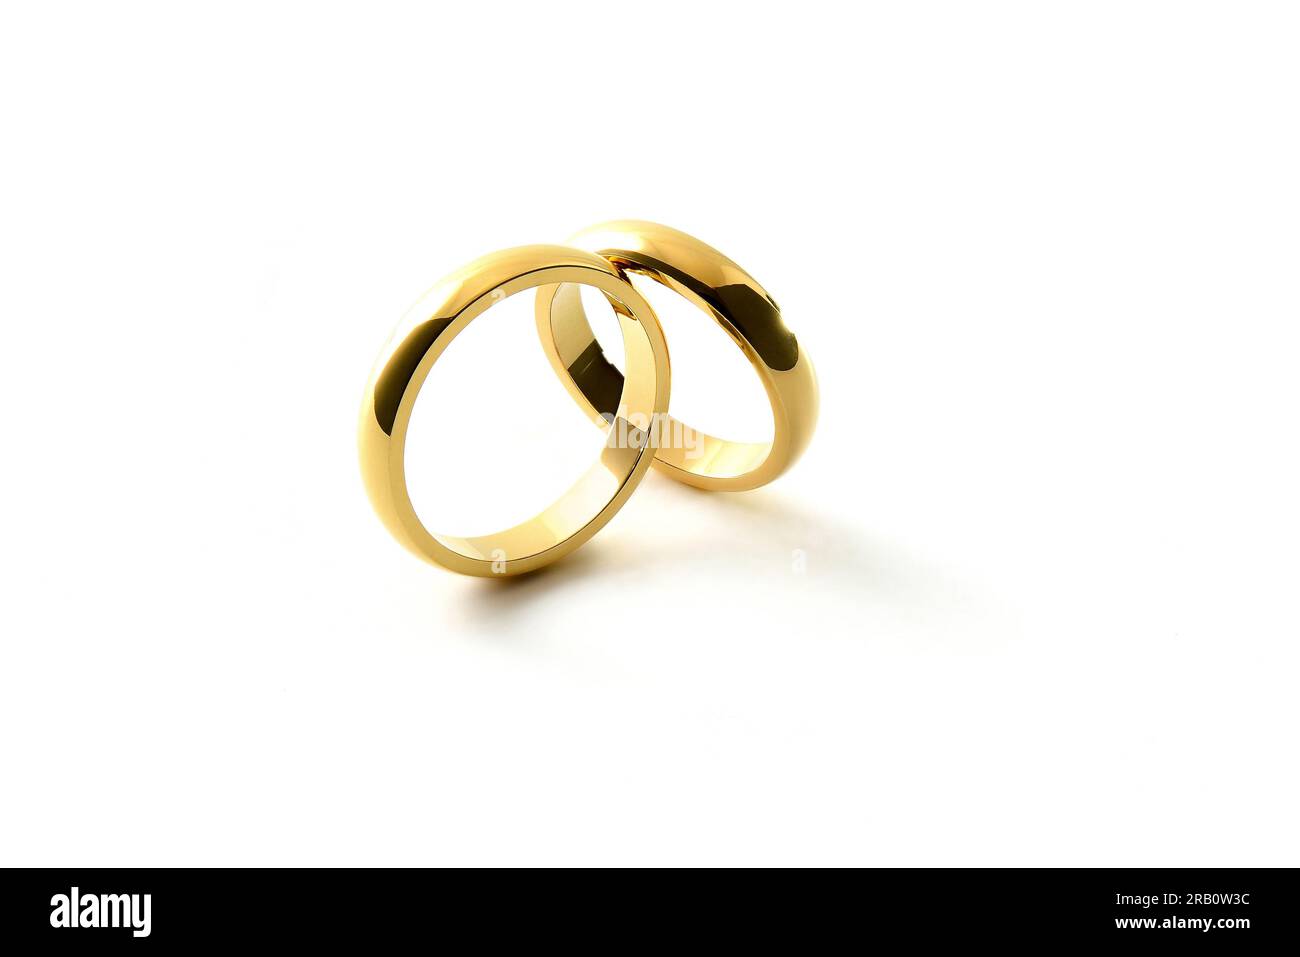 Ethical gold wedding rings for Indian weddings - Lebrusan Studio